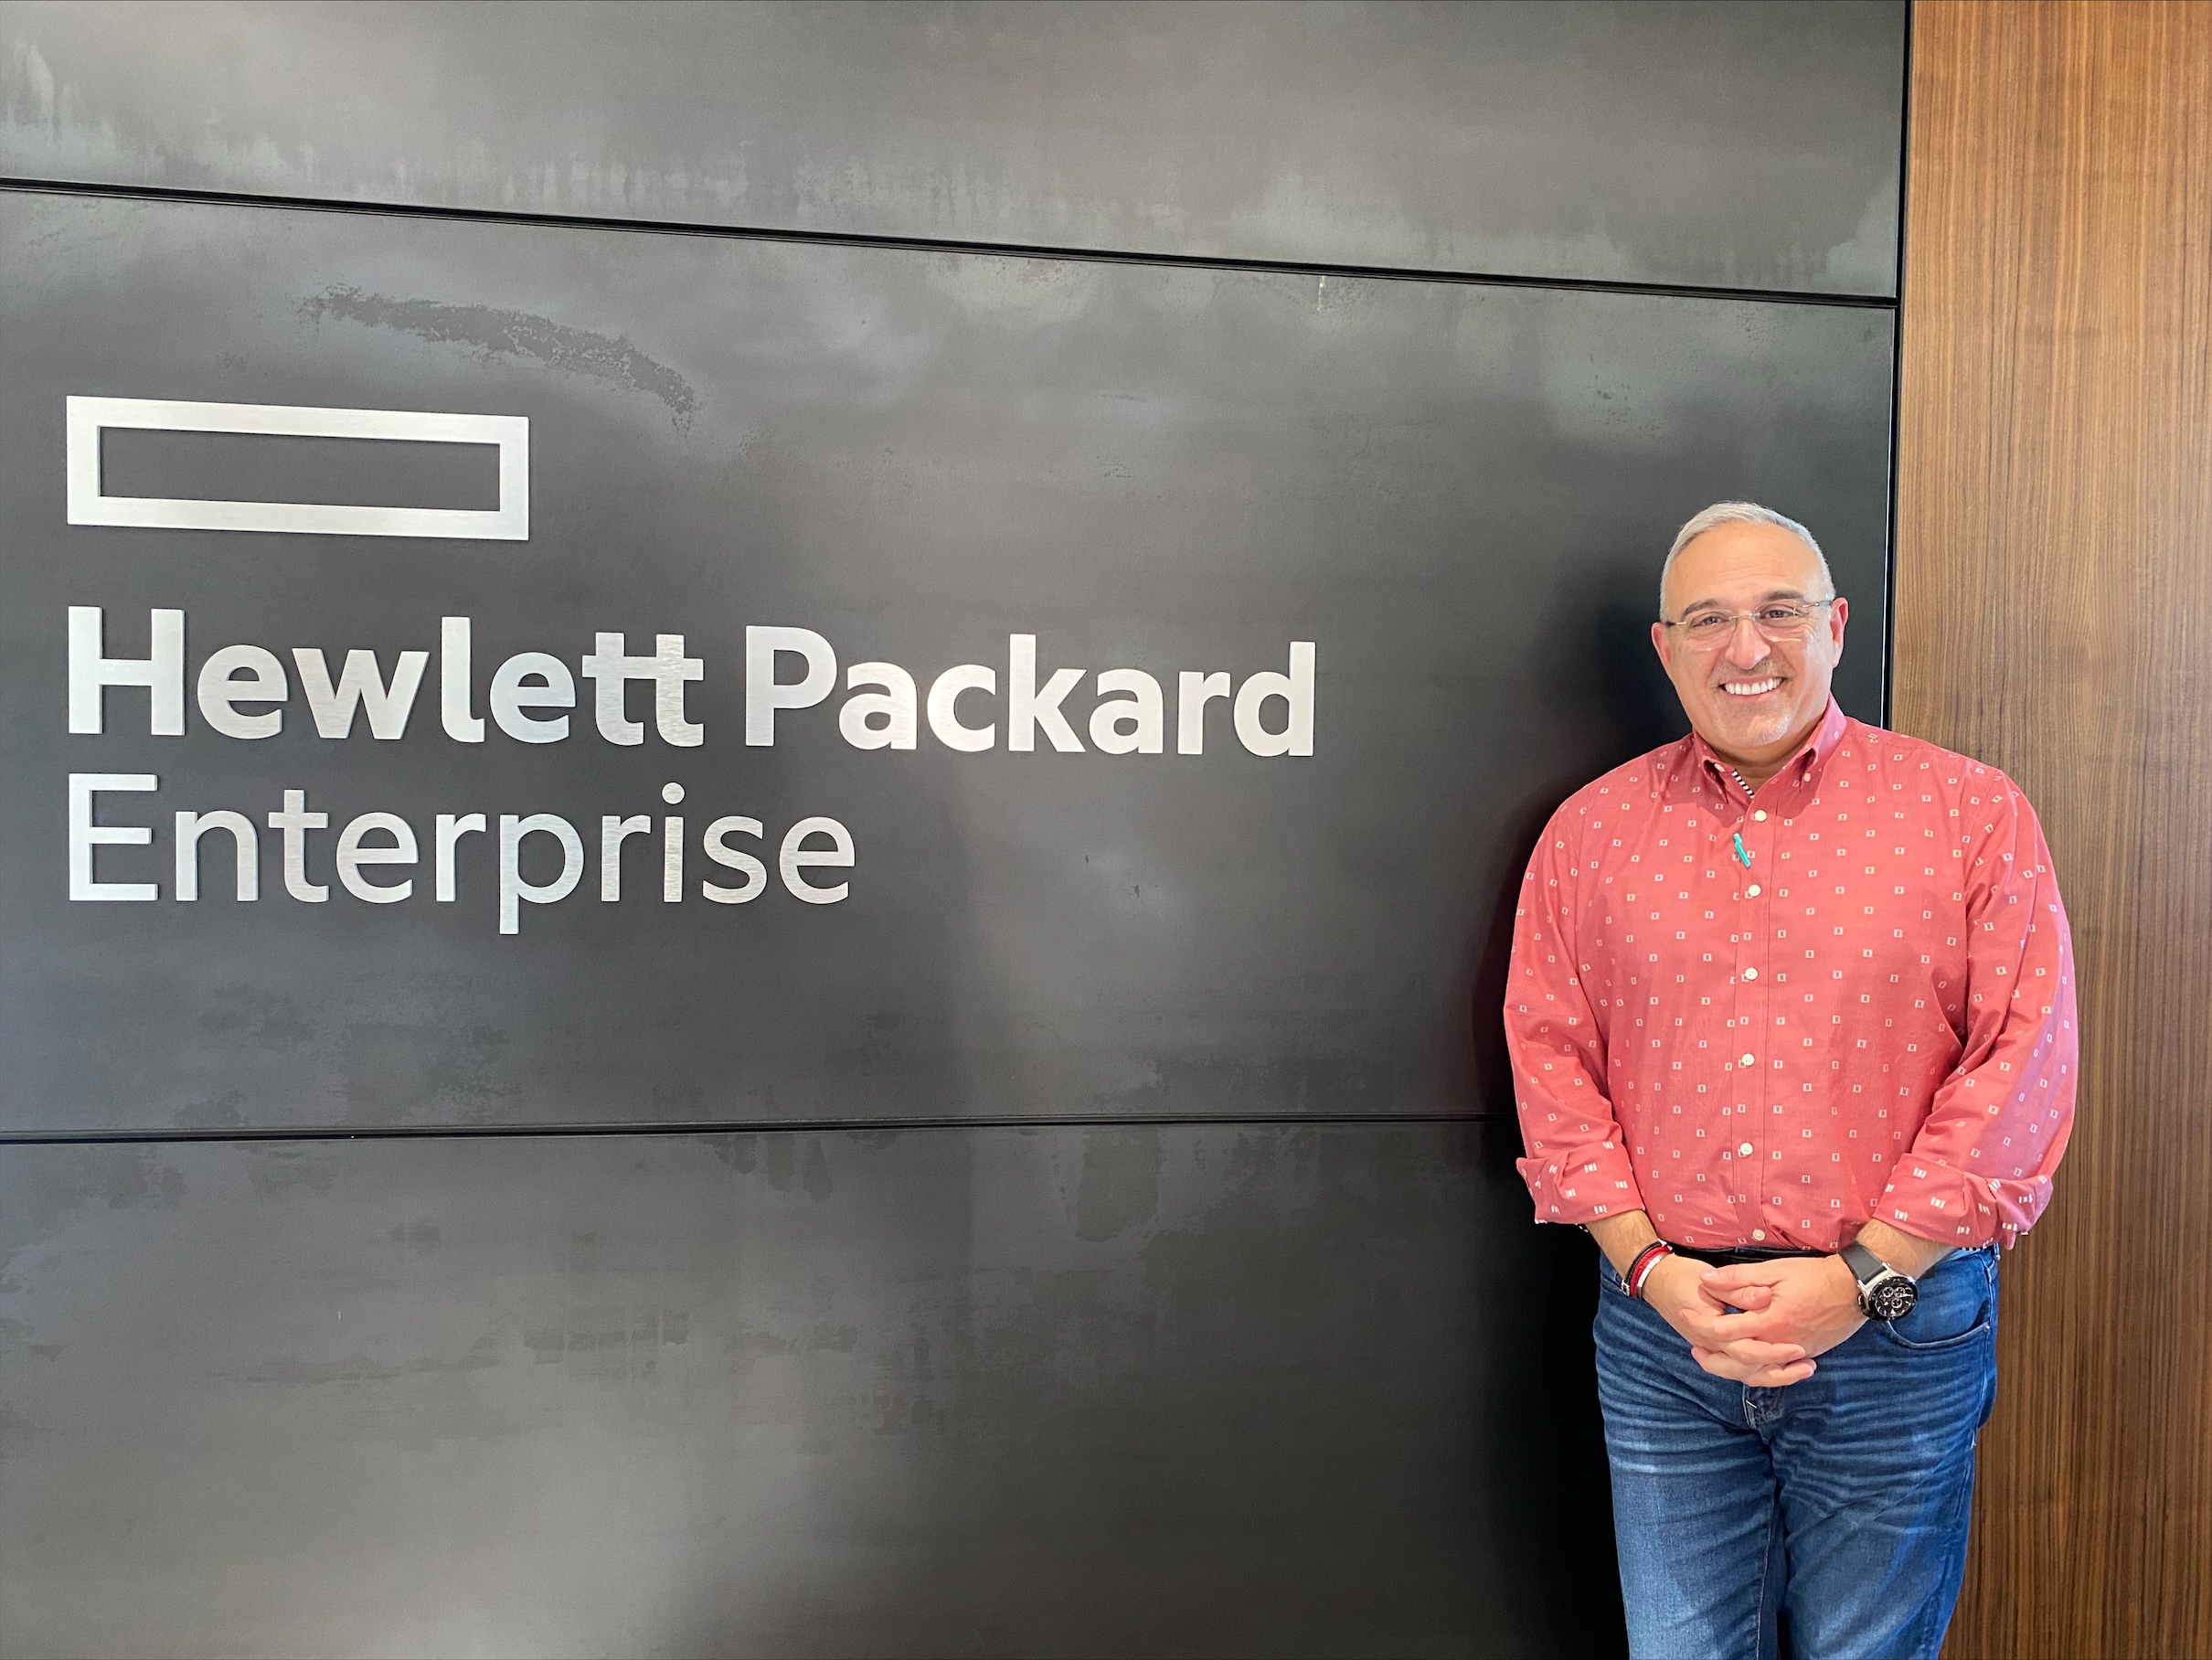 George Eliot Raadplegen Huisdieren The culture of 'we' before 'I': A chat with Hewlett Packard Enterprise CEO  Antonio Neri - Marketplace